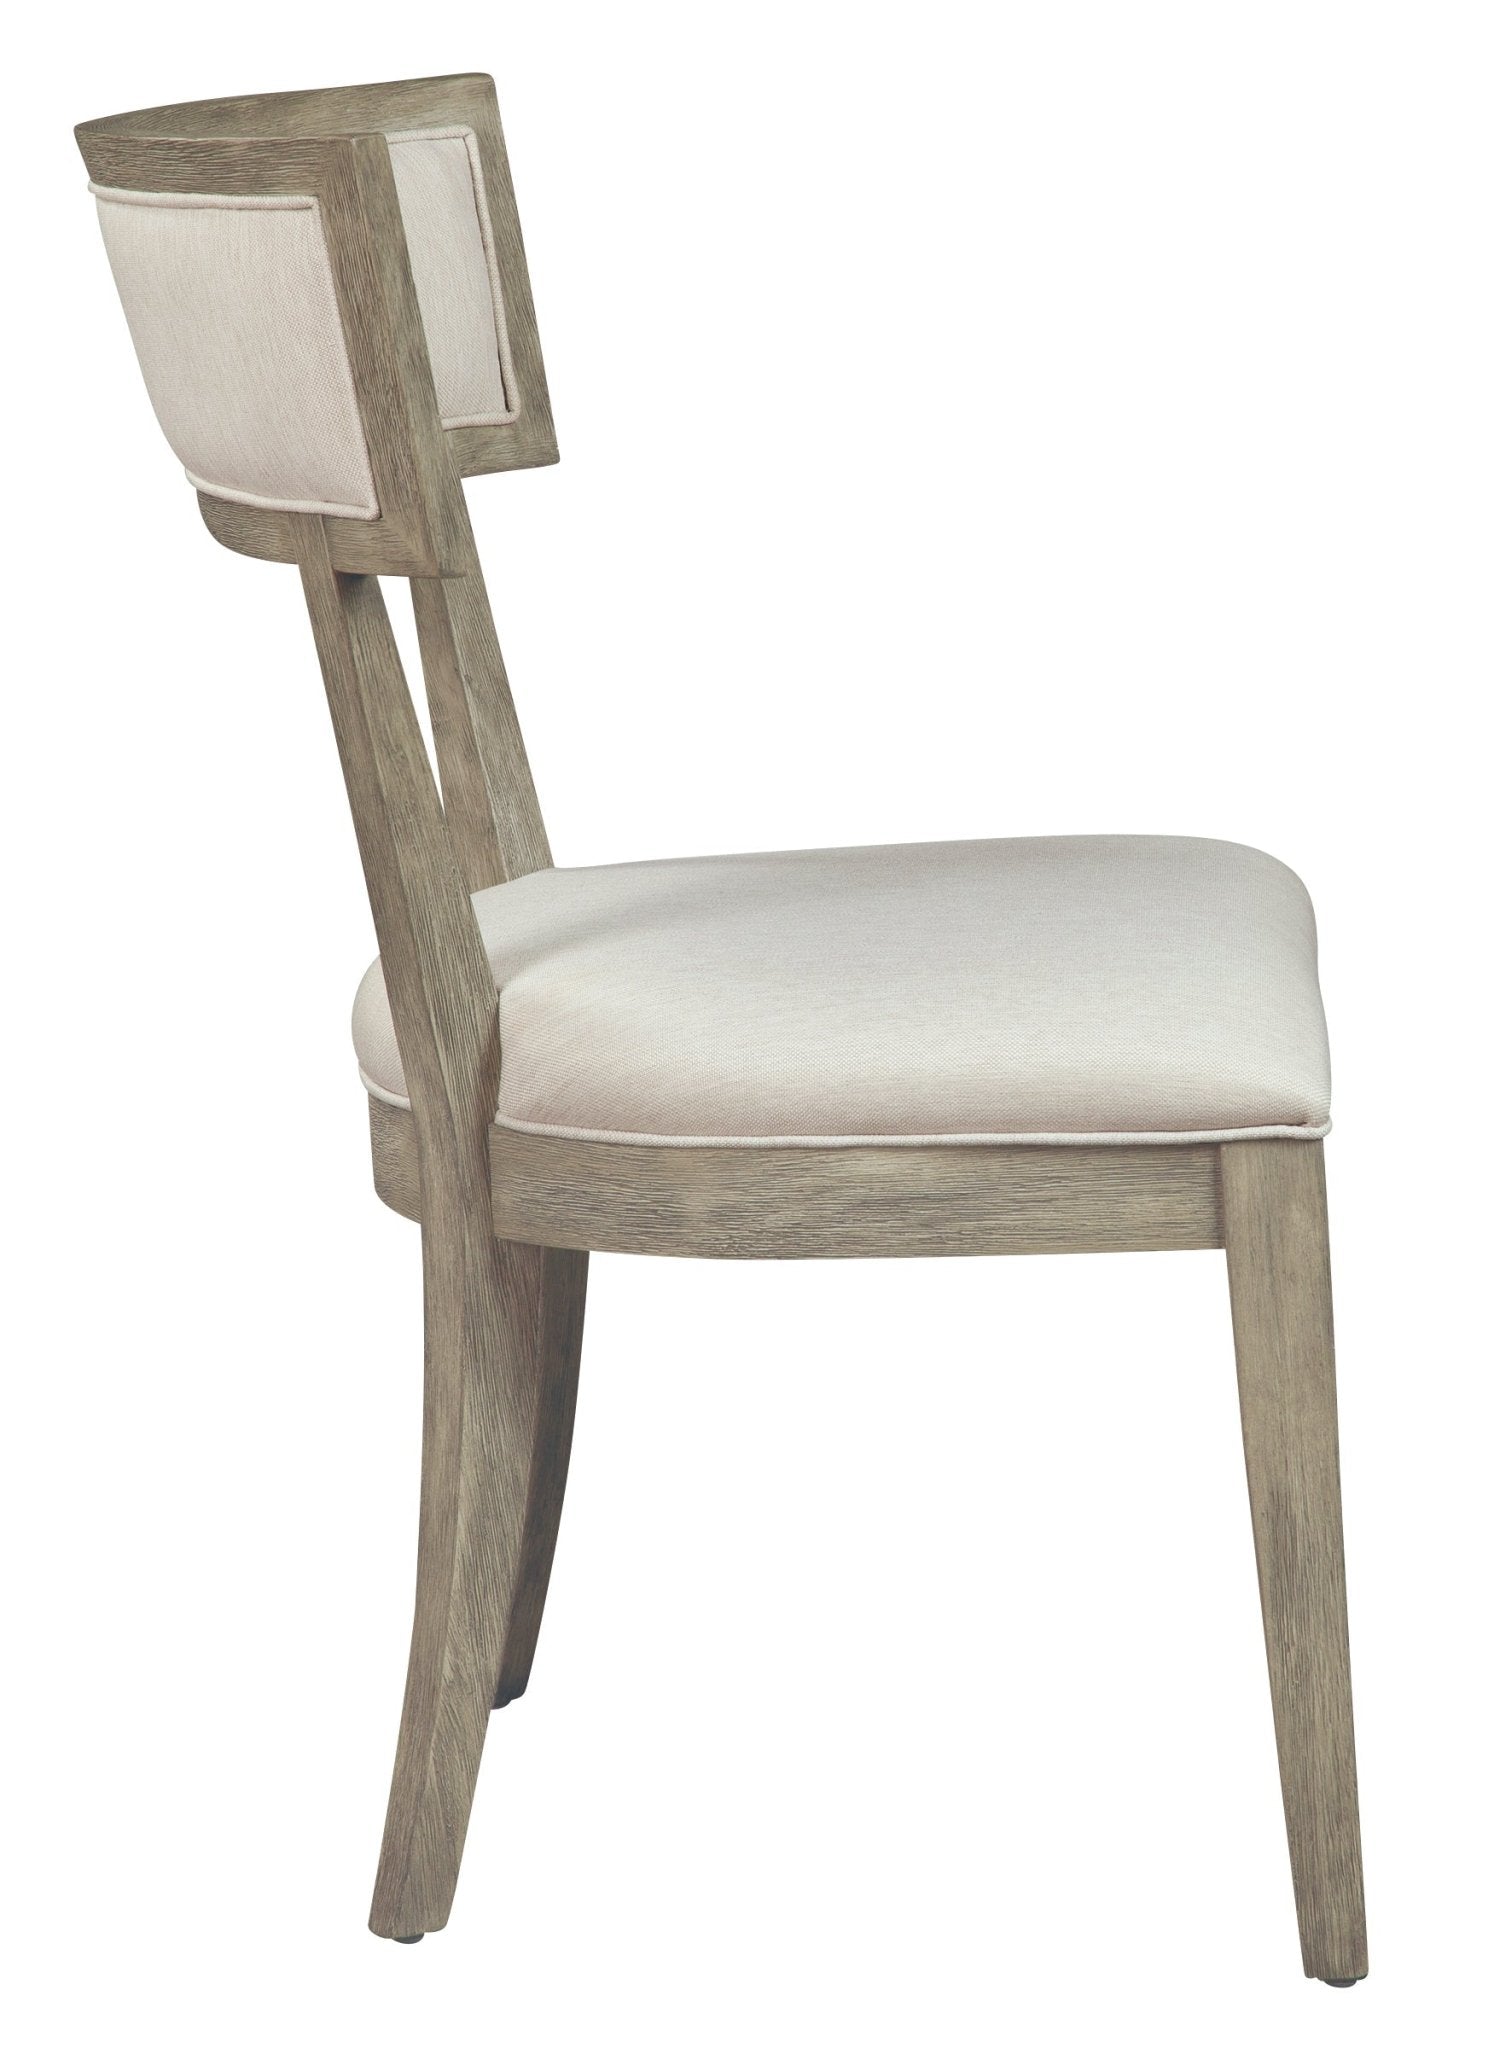 Bedford Park Gray Side Chair - Furniture - Tipplergoods